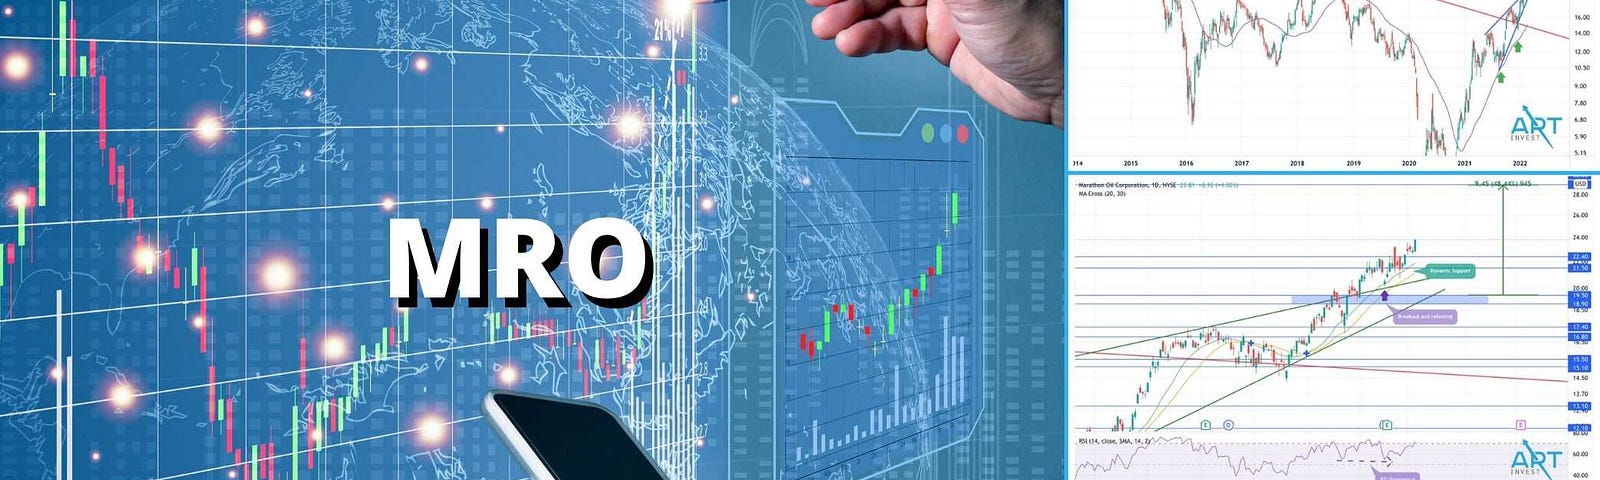 MRO stock technical analysis